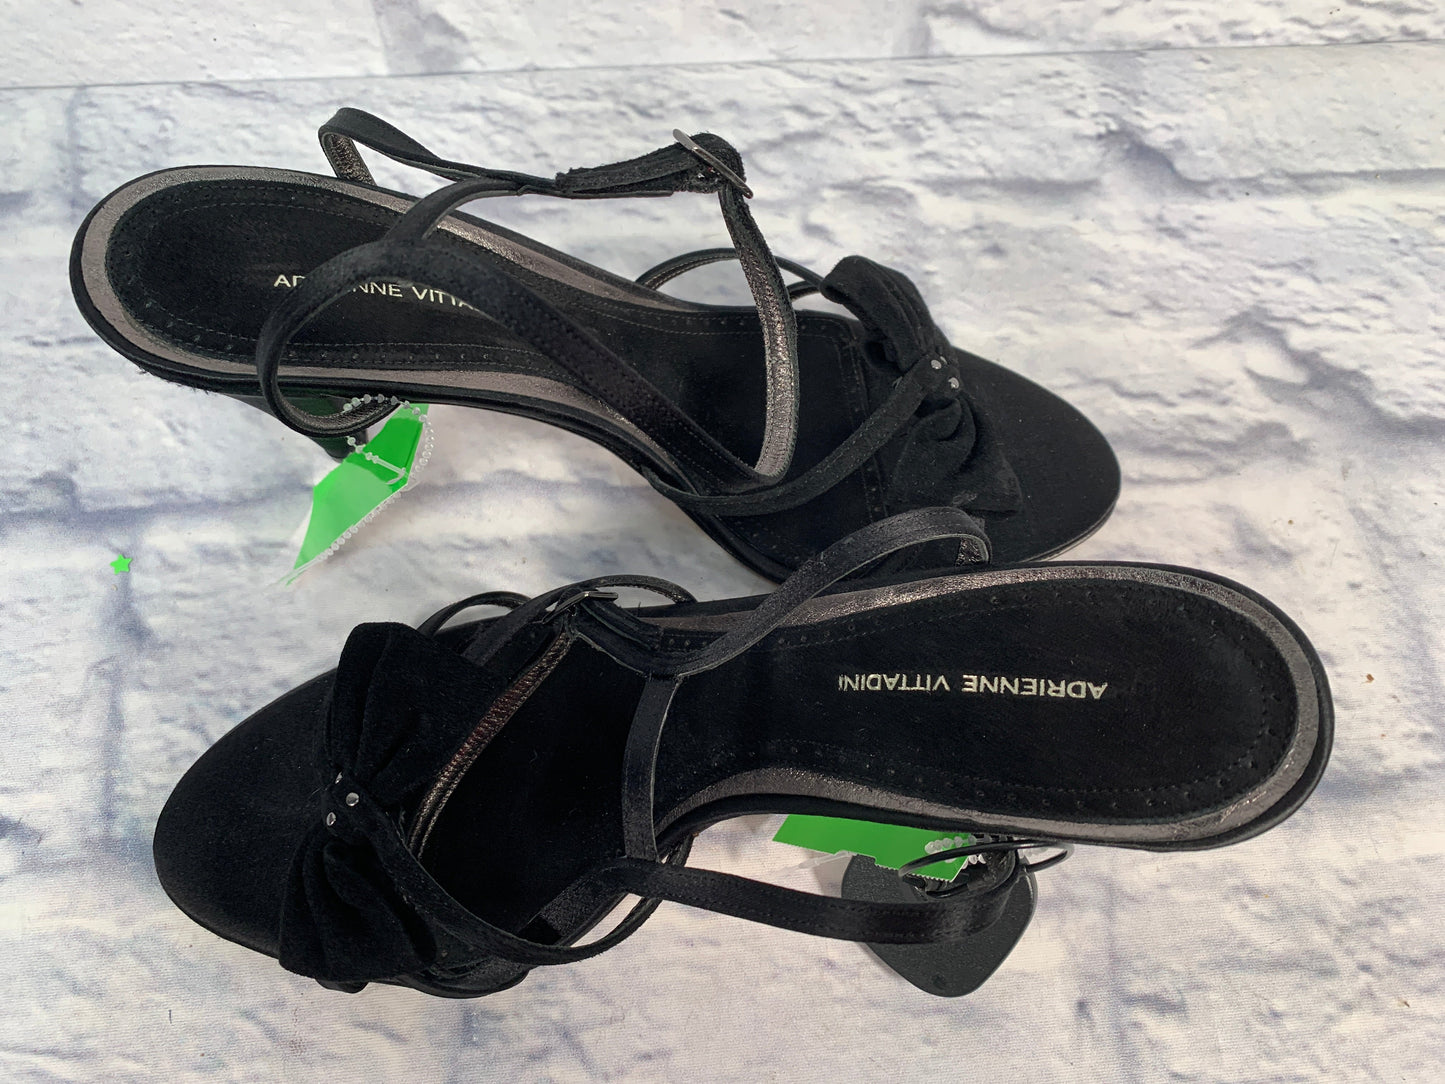 Sandals Heels Stiletto By Adrienne Vittadini  Size: 9.5